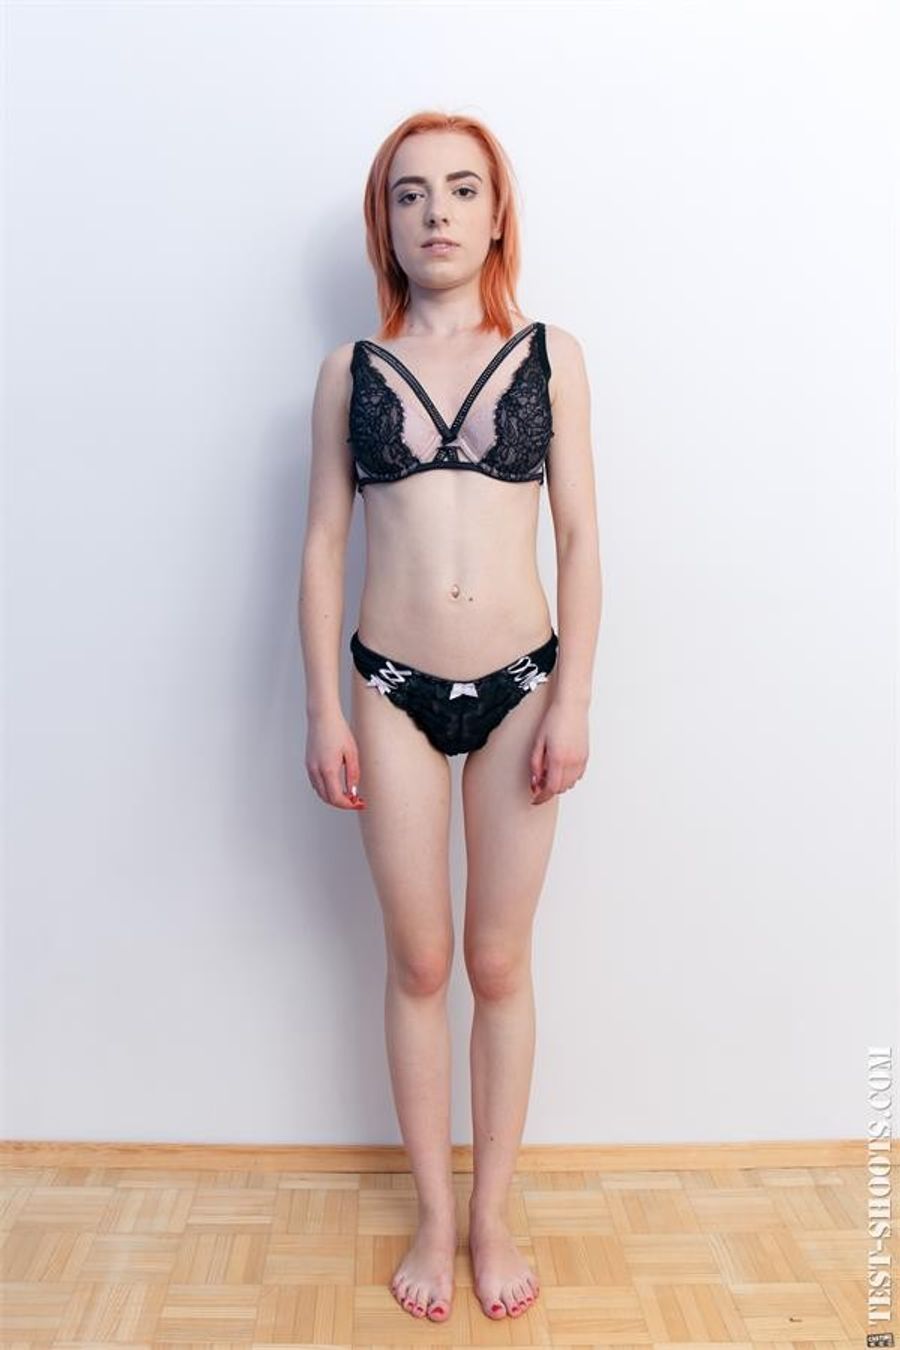 Thumbelina Xxx - Thumbelina 150cm extrasmall nude teenager casting Photo Gallery: Porn Pics,  Sex Photos & XXX GIFs at TNAFLIX